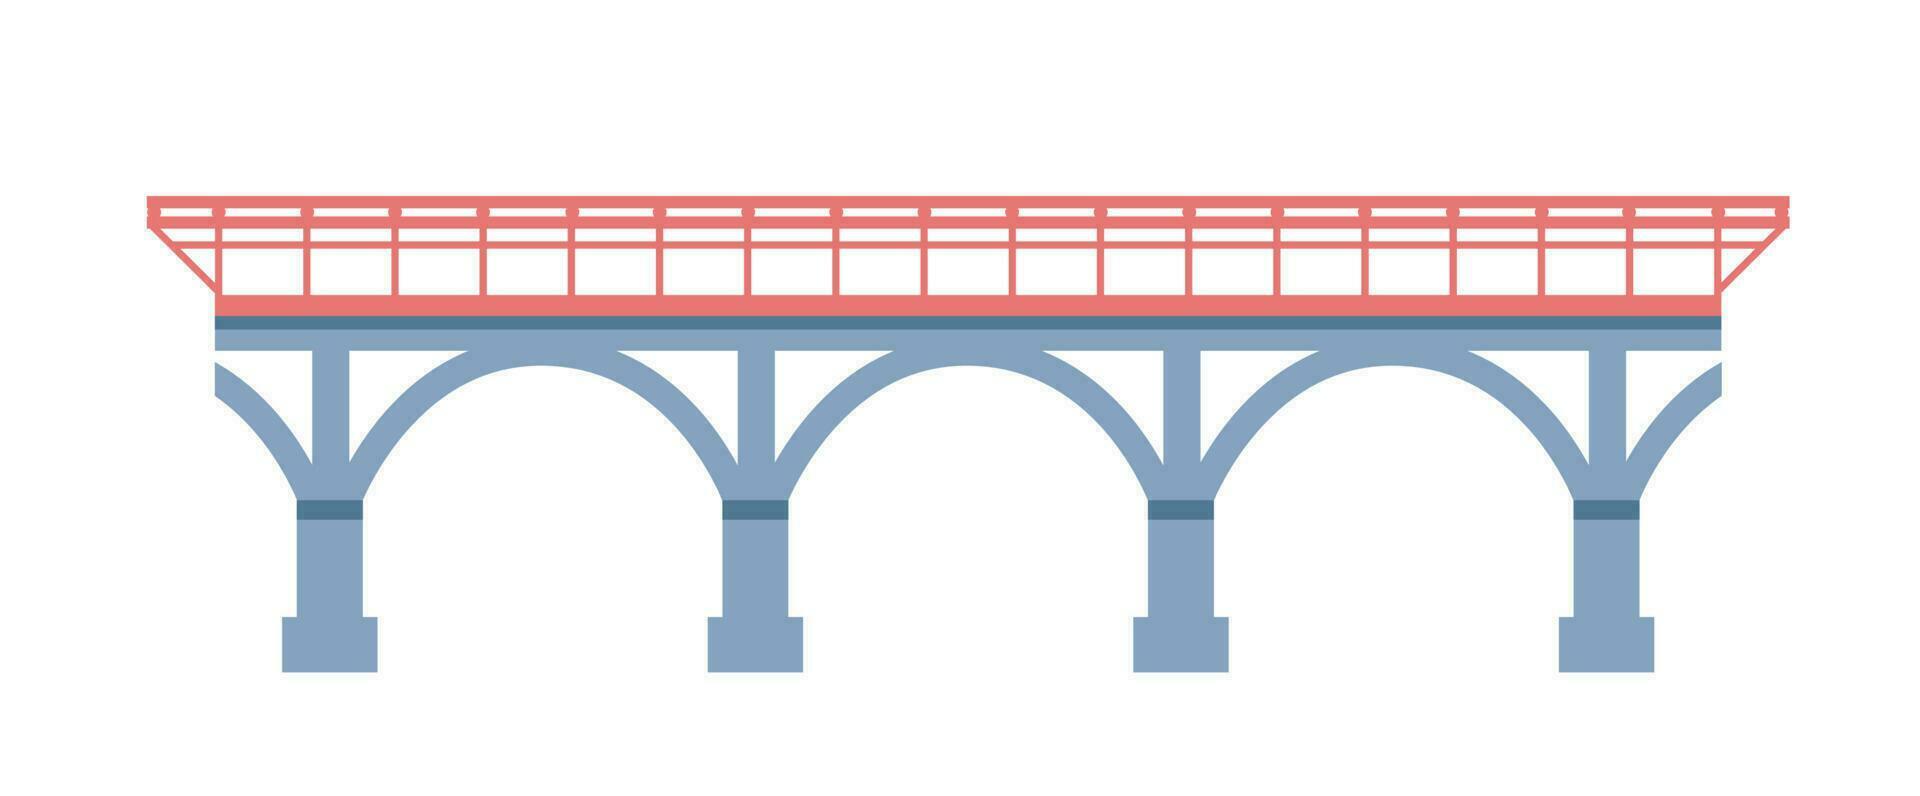 Architectural construction for city, modern bridge vector